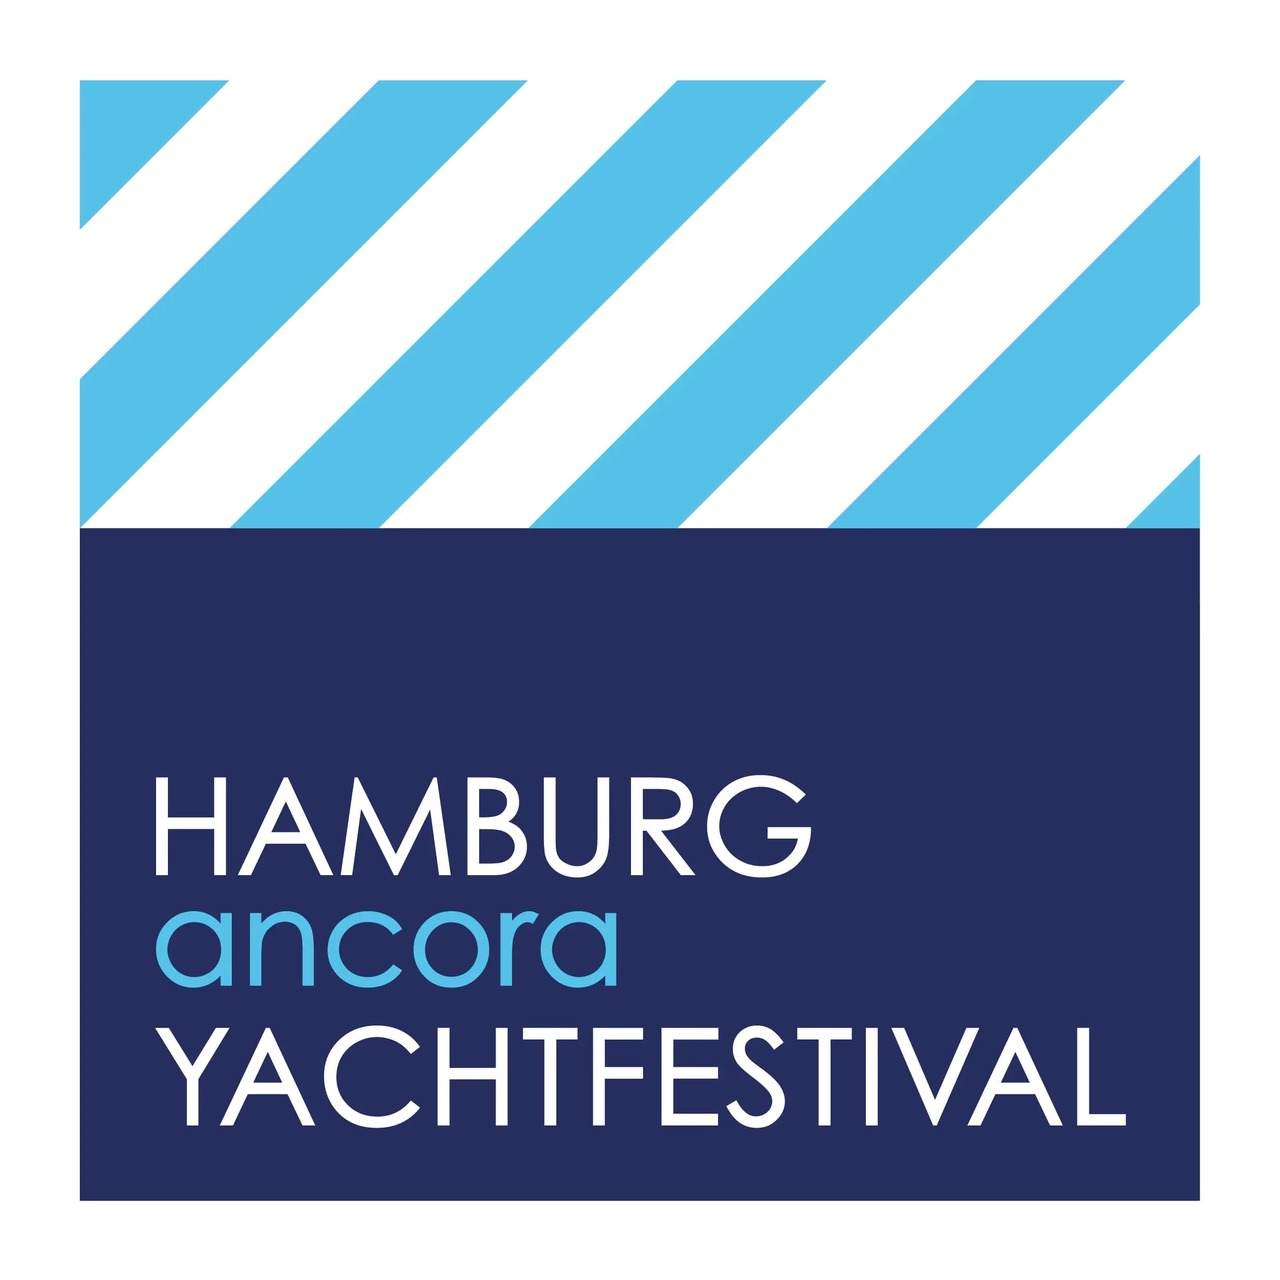 HAMBURG Ancora YACHTFESTIVAL | Germany